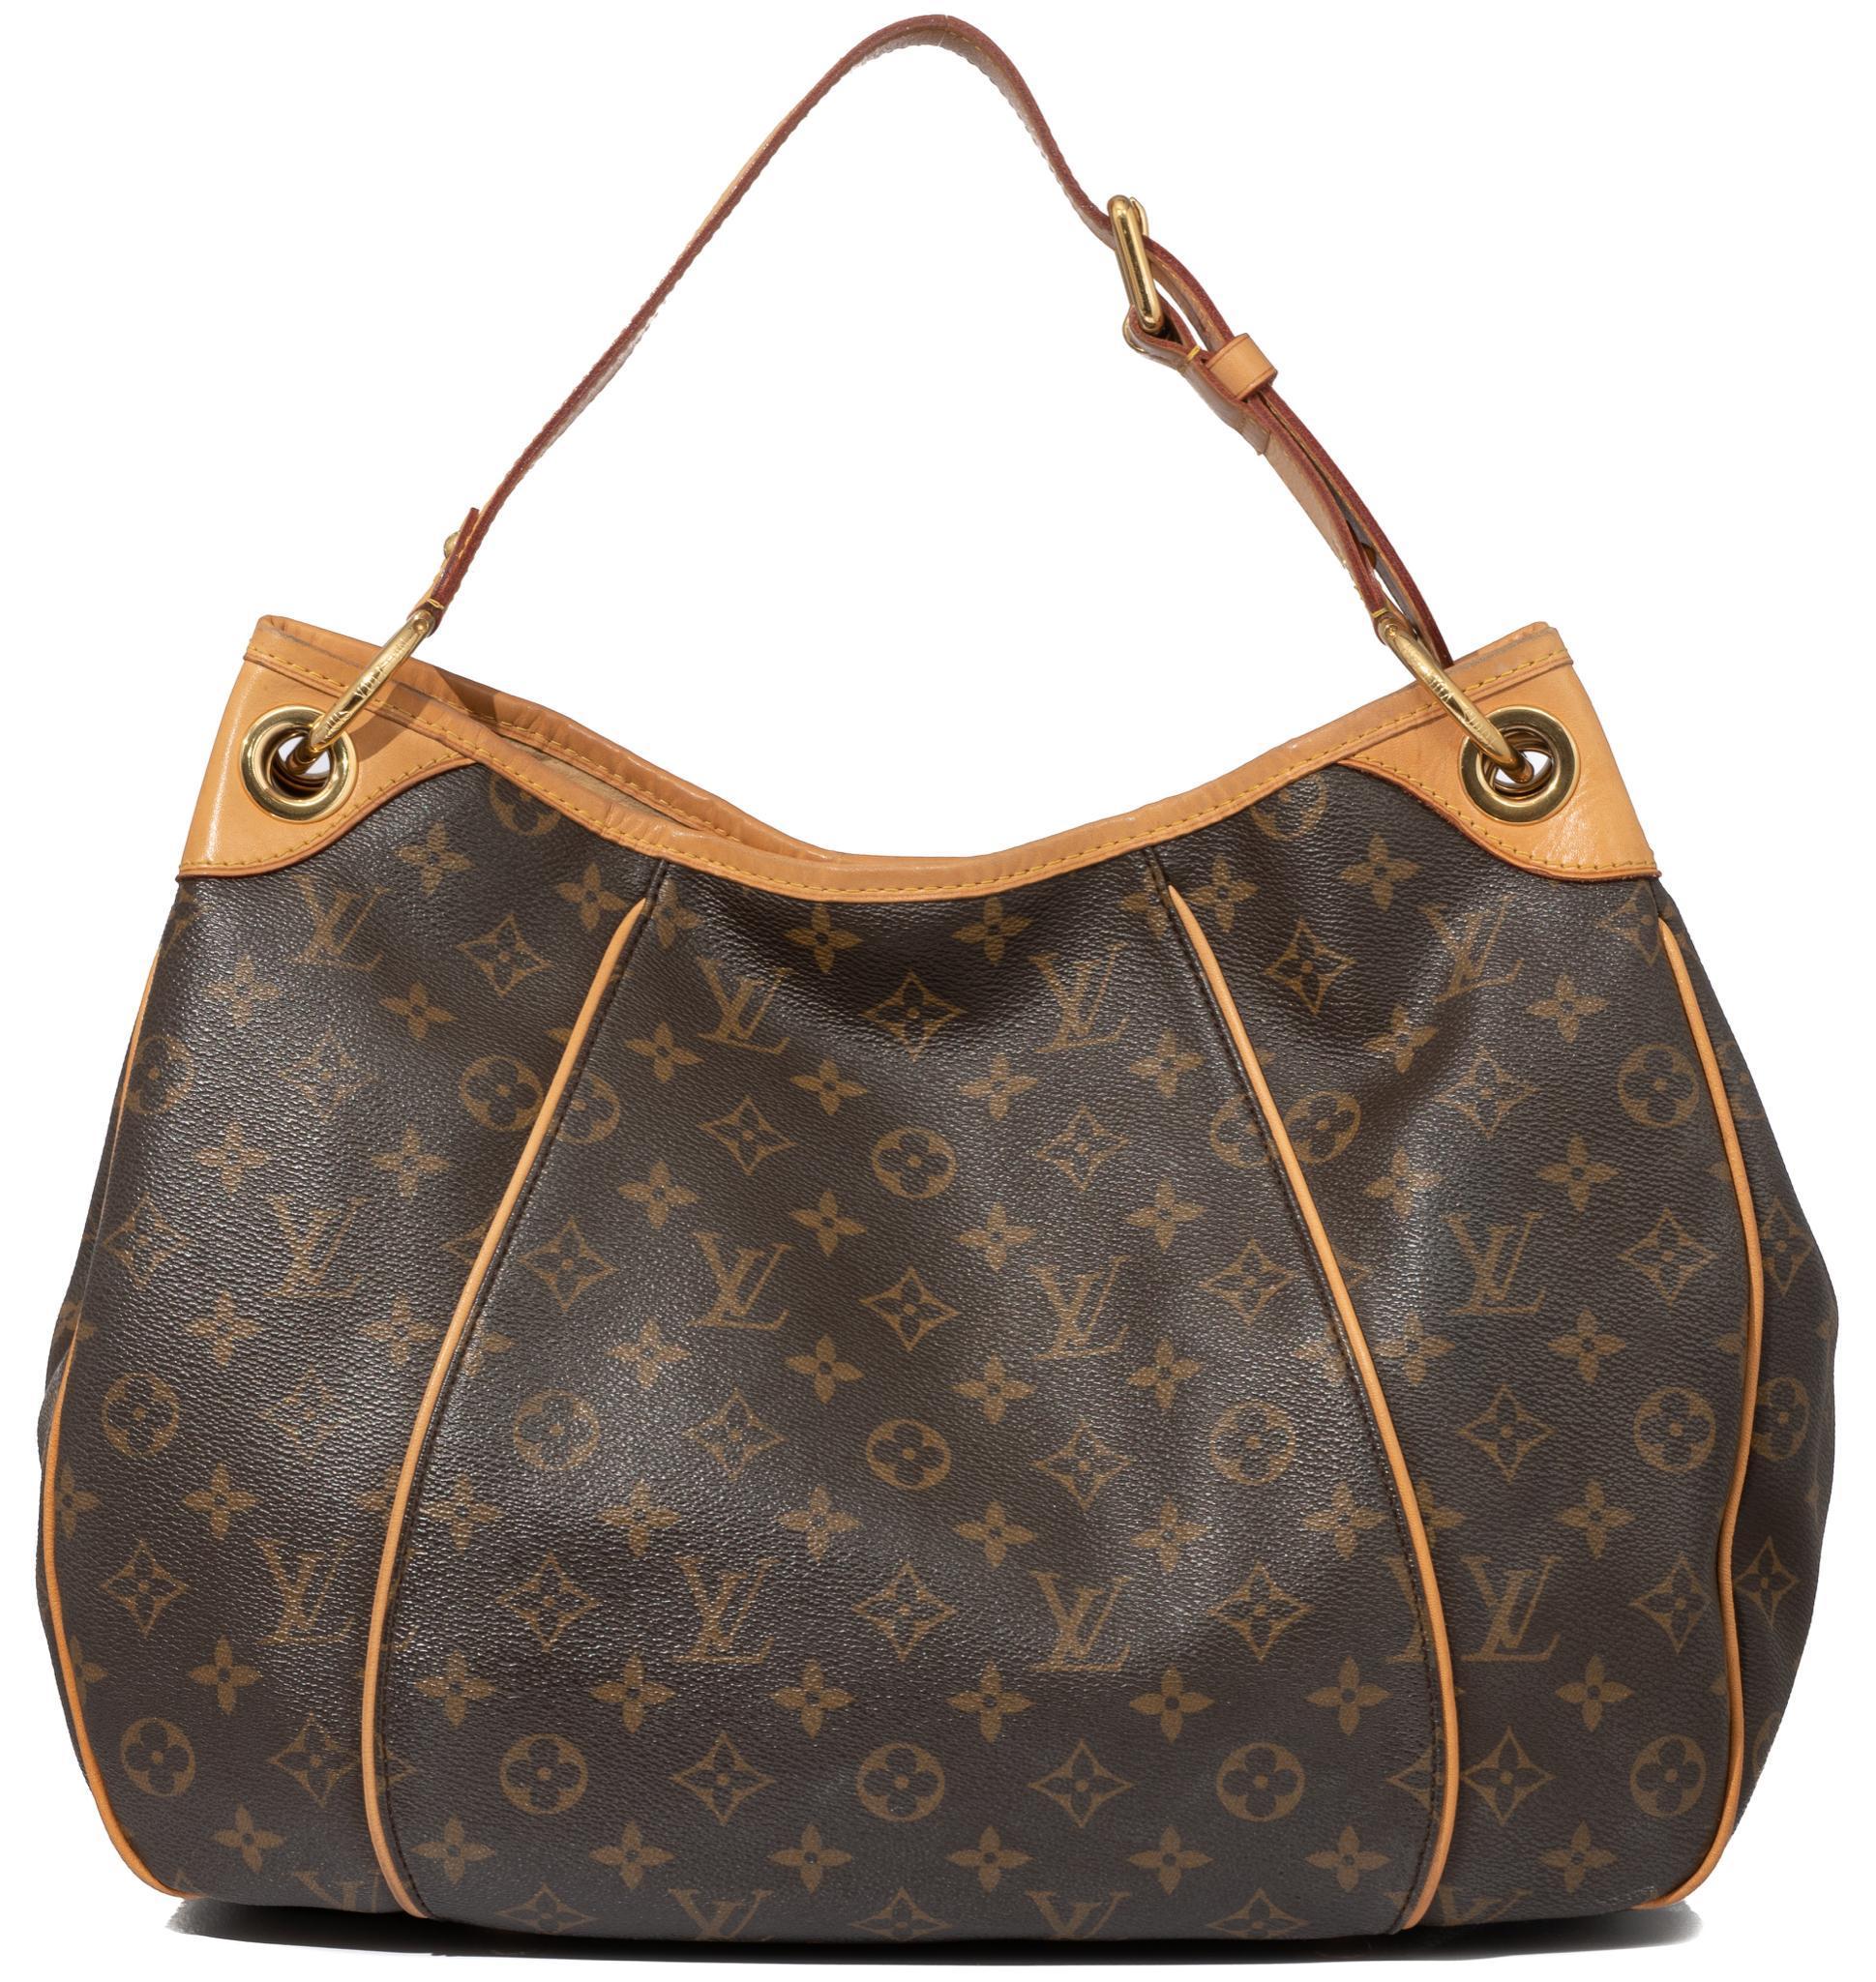 Sold at Auction: Louis Vuitton - Bucket Bag - Brown Monogram - Tan